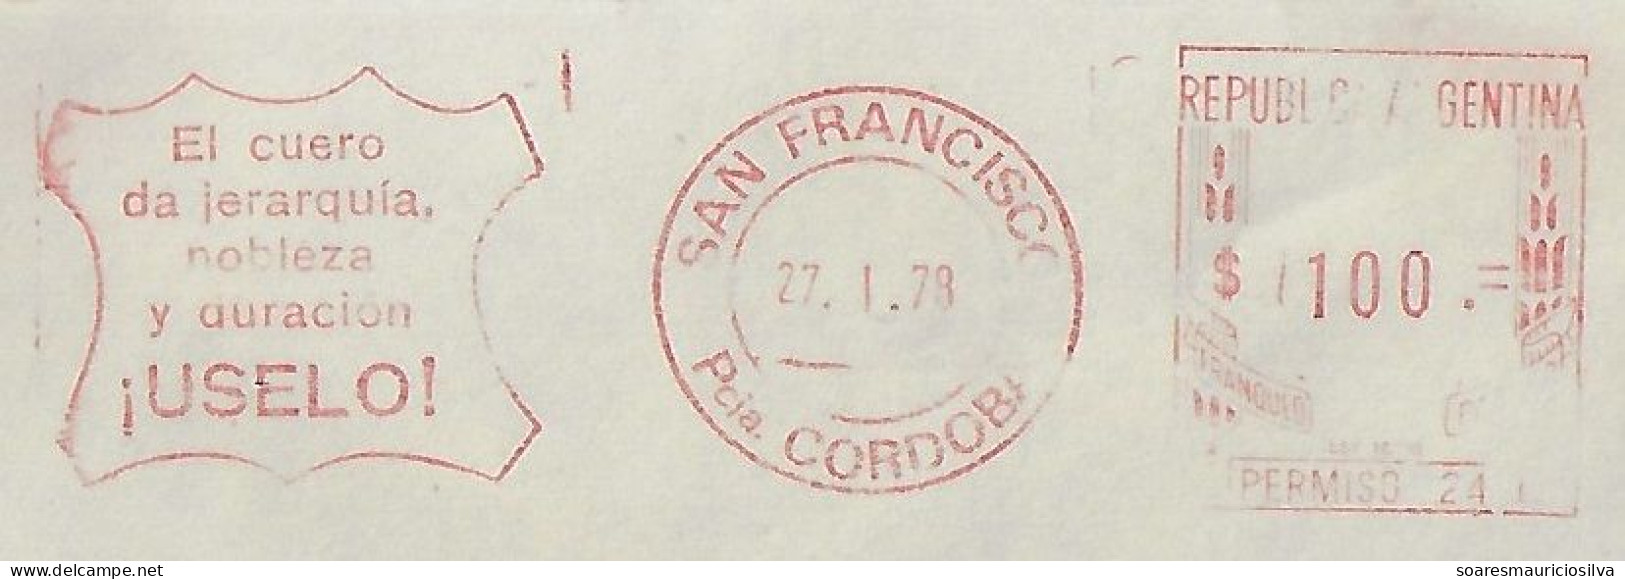 Argentina 1978 Cover San Francisco Obispo Trejo Meter Stamp Postalia Slogan Leather Gives Hierarchy Nobility Durability - Lettres & Documents